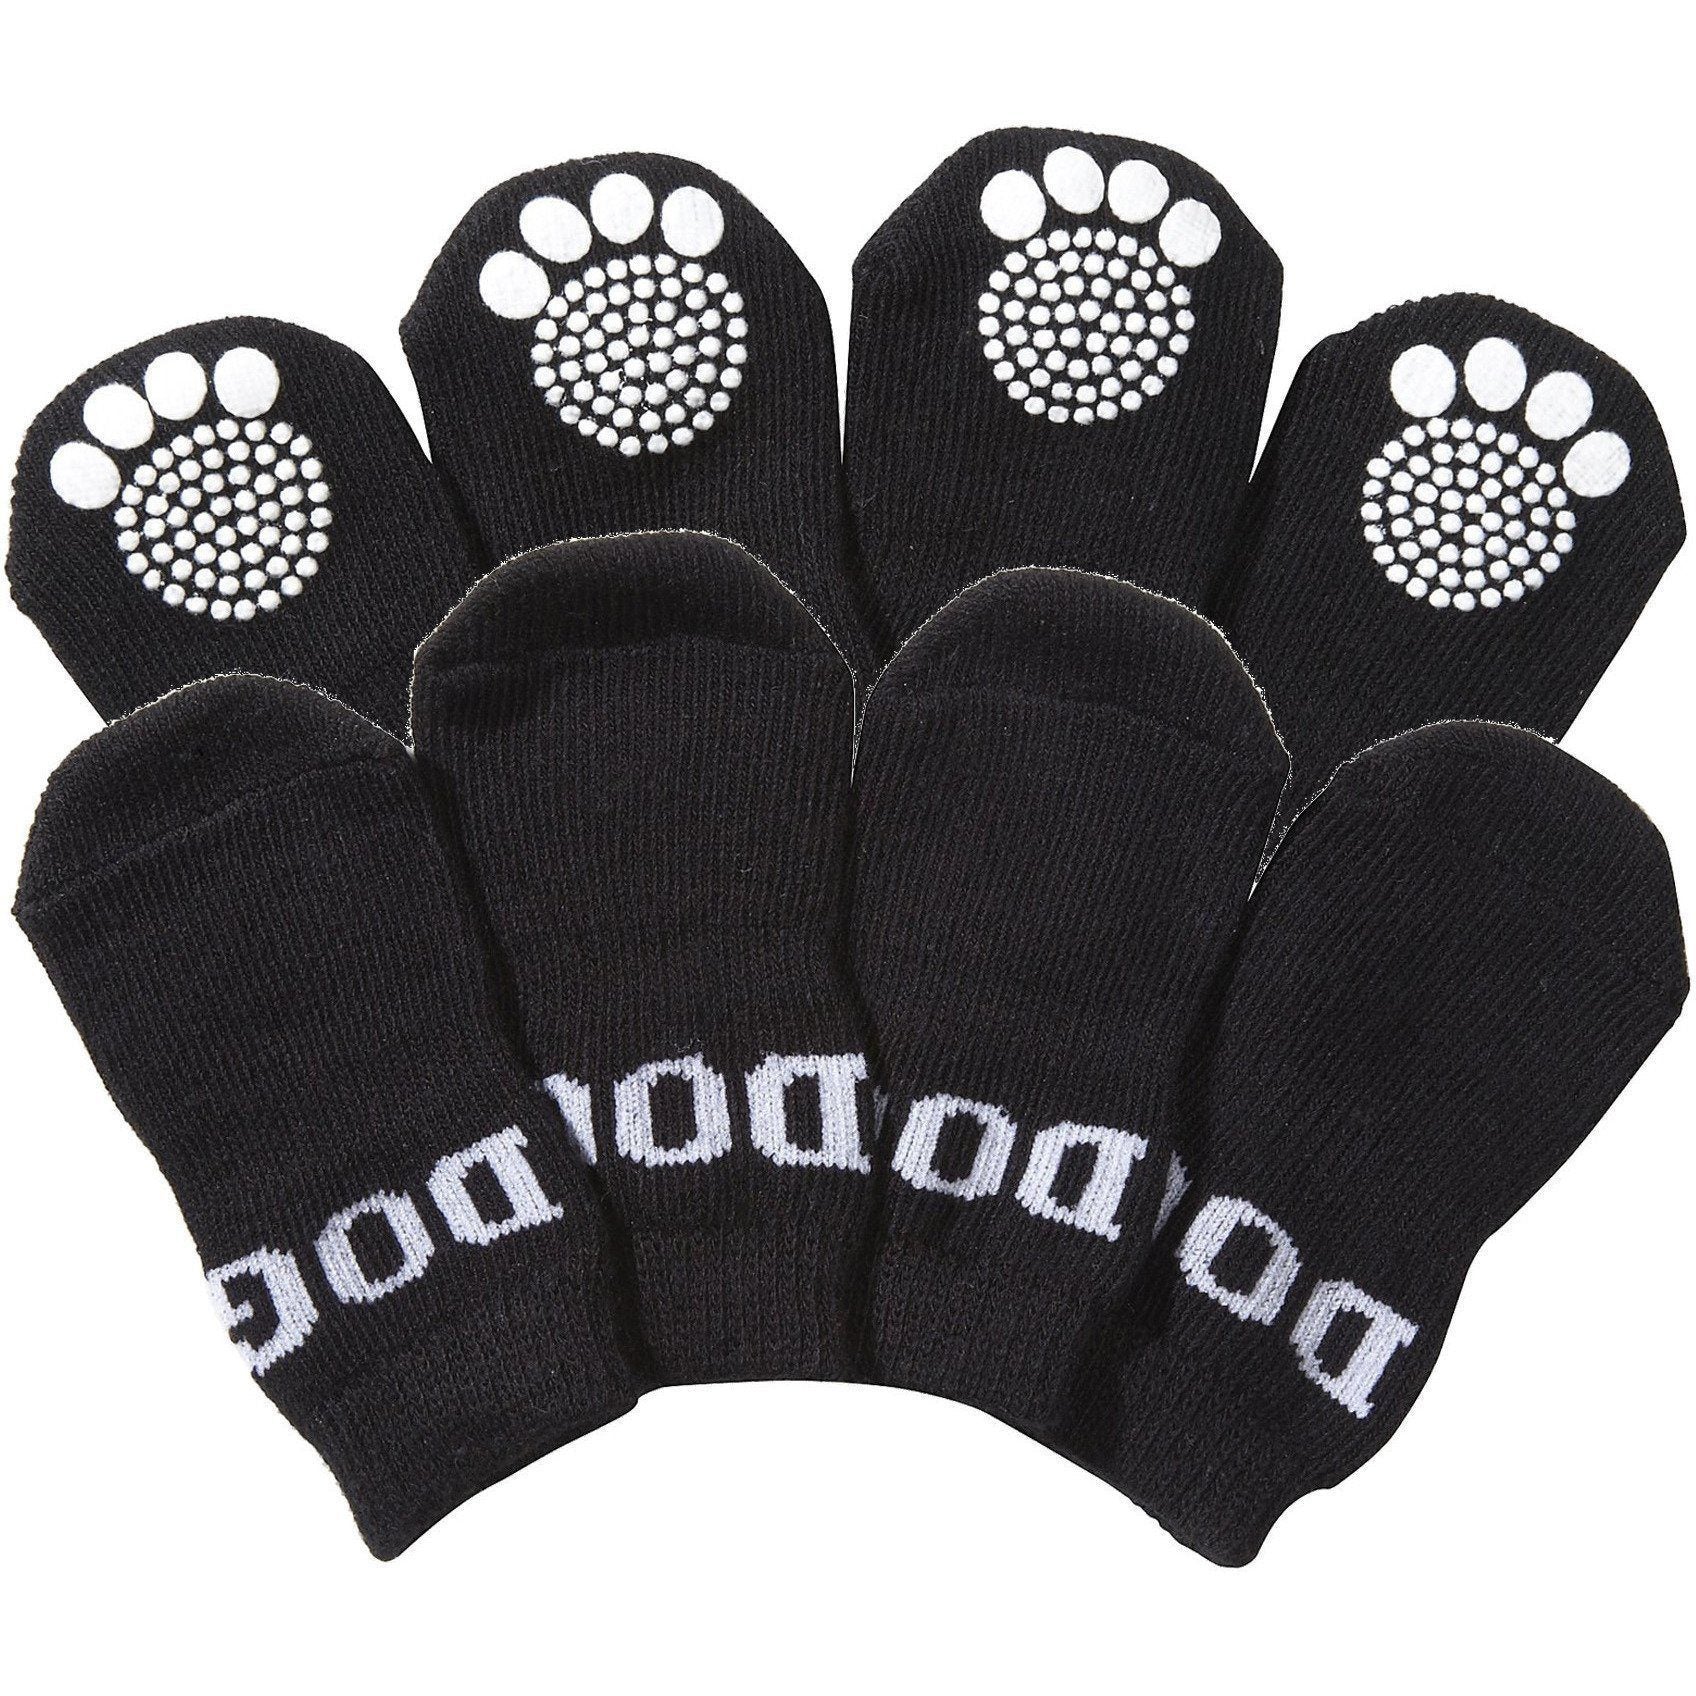 Pet Life ® Anti-Slip Rubberized Gripped Breathable Stretch Pet Dog Socks - Set of 4 Small Black